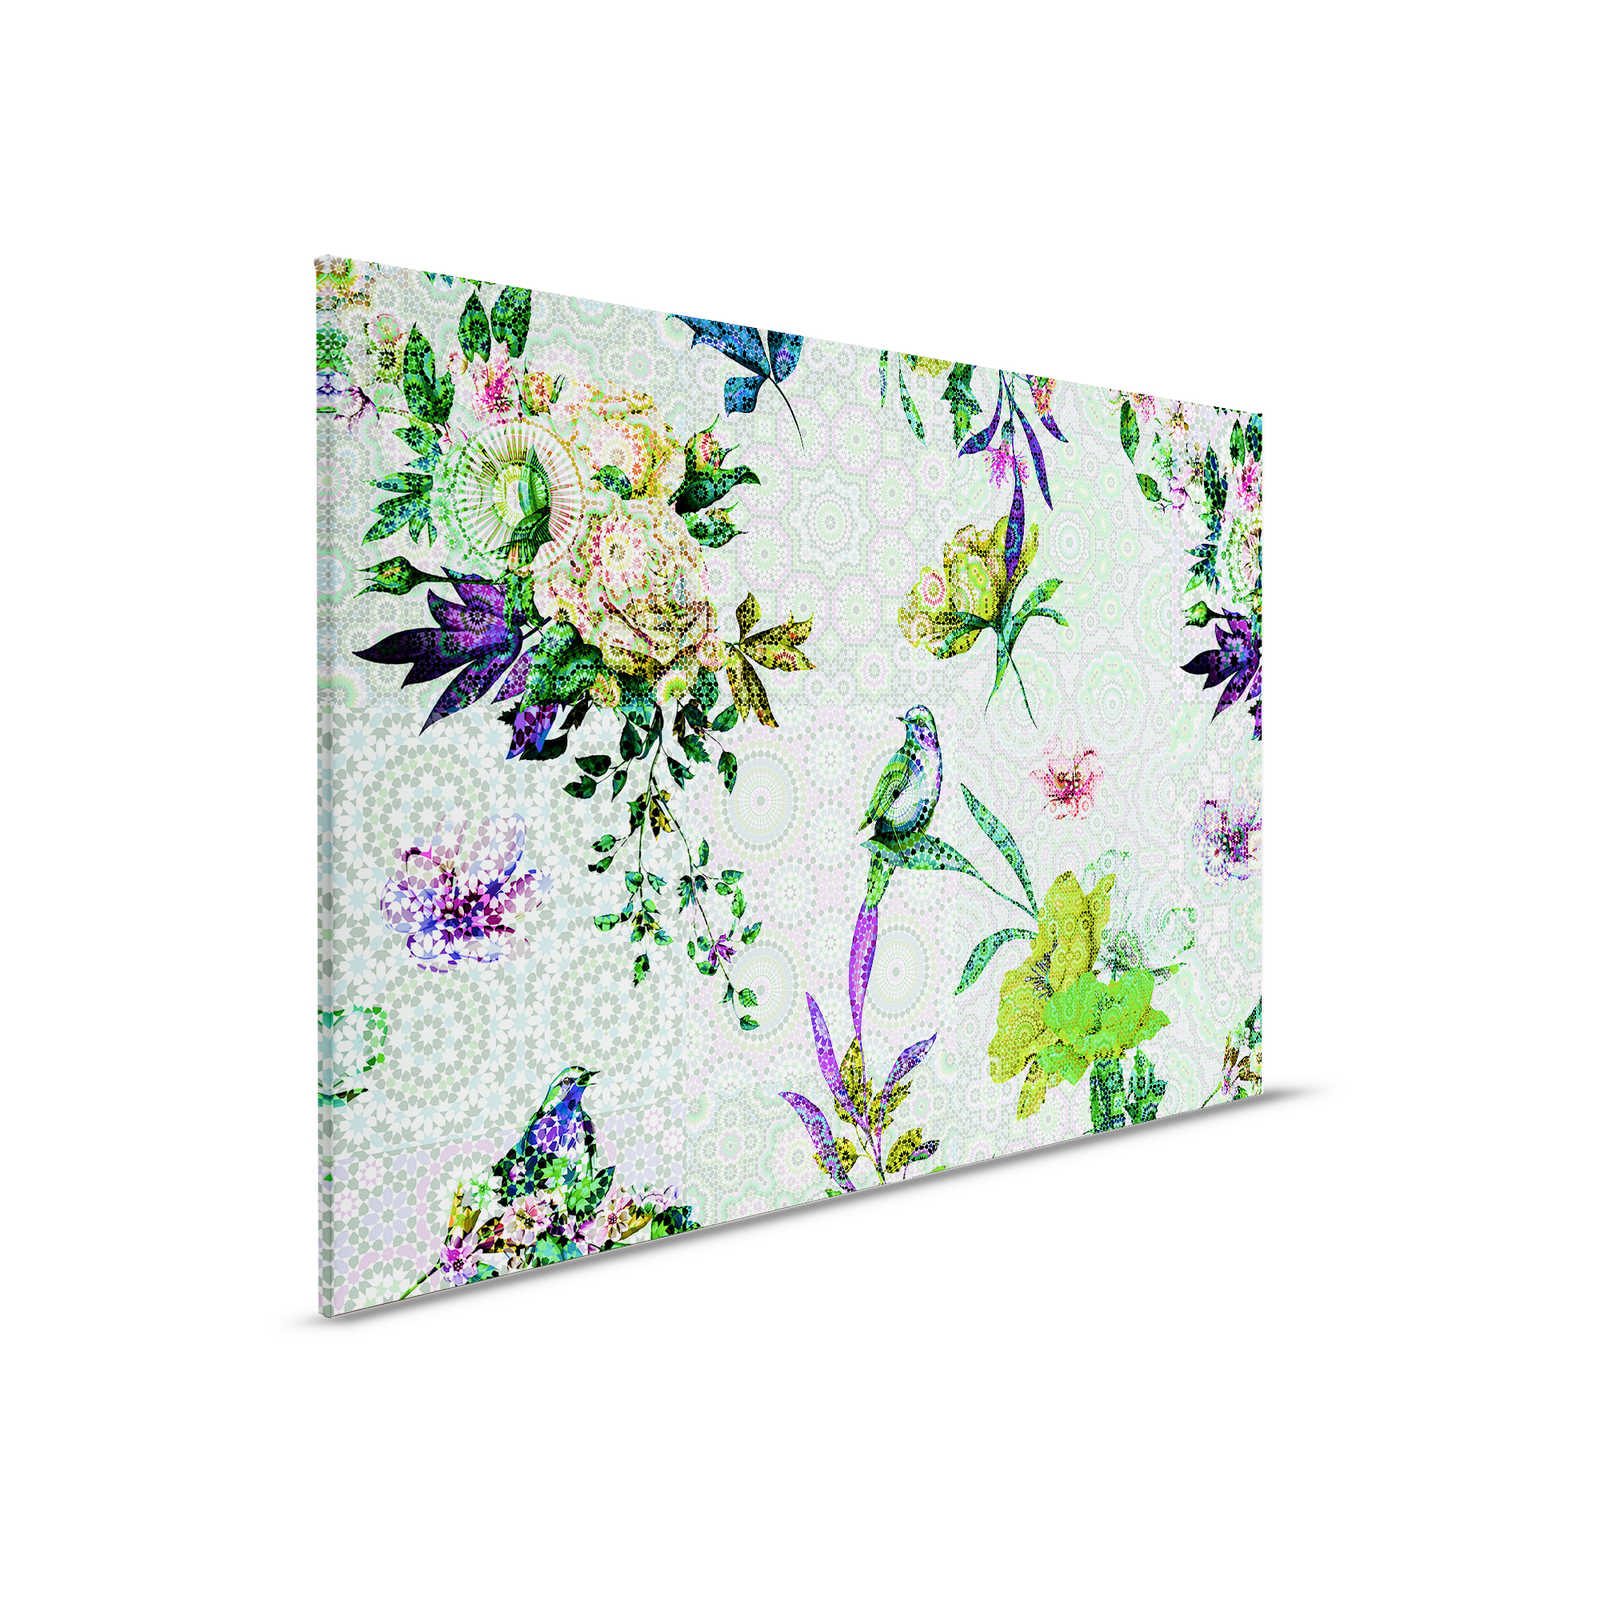         Blumen Leinwandbild mit modernem Mosaik Design – 0,90 m x 0,60 m
    